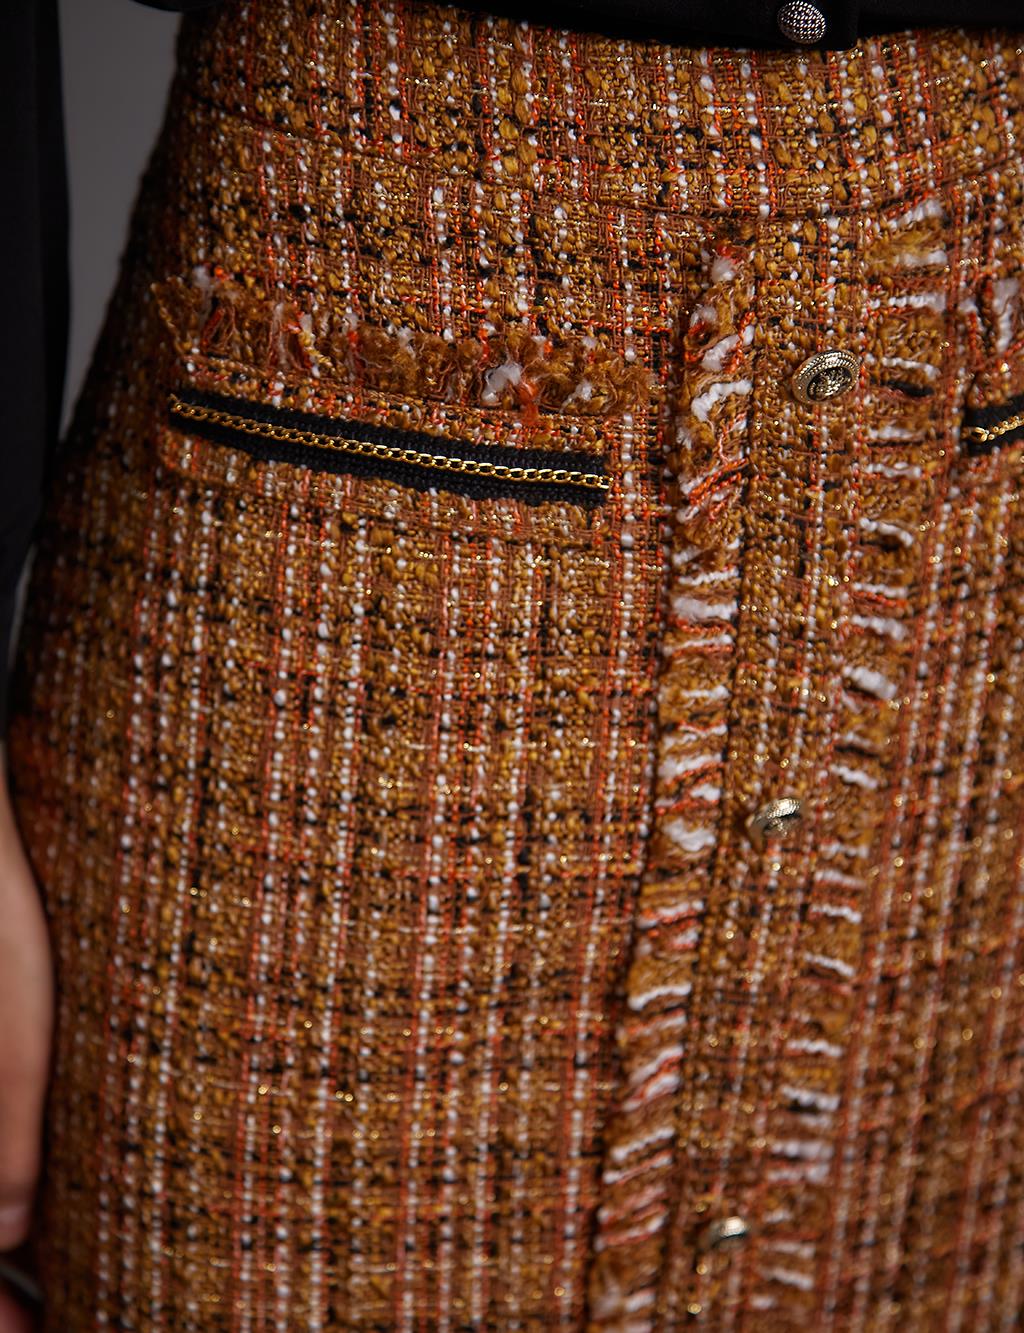 Buttoned Tweed Pencil Skirt Beige